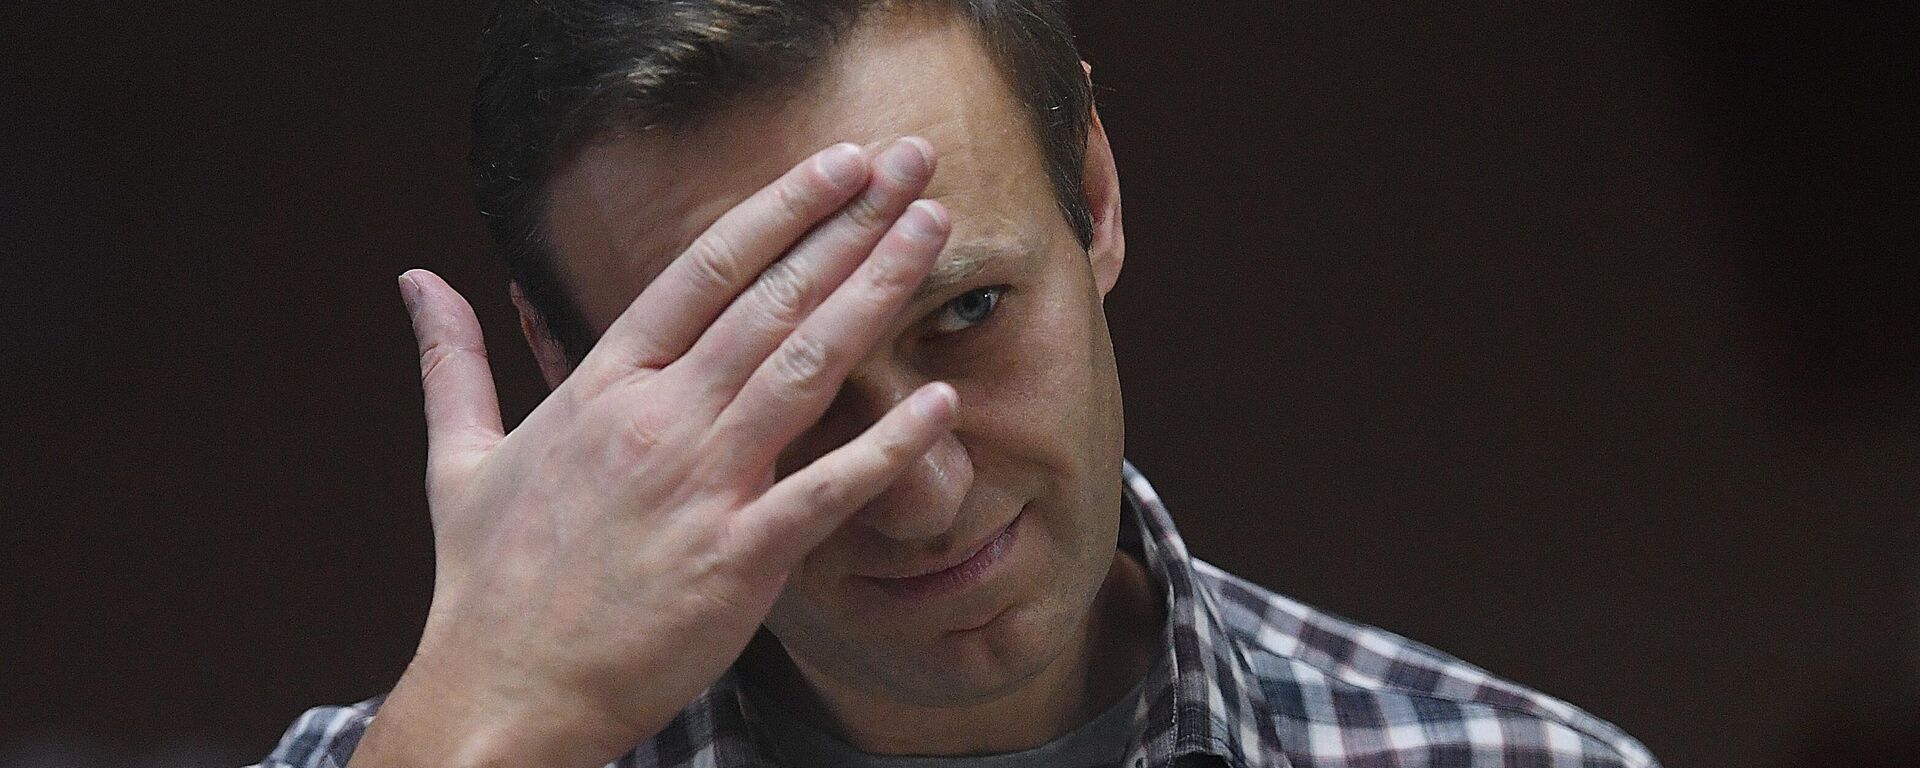 Alexéi Navalni, bloguero opositor ruso - Sputnik Mundo, 1920, 09.06.2021